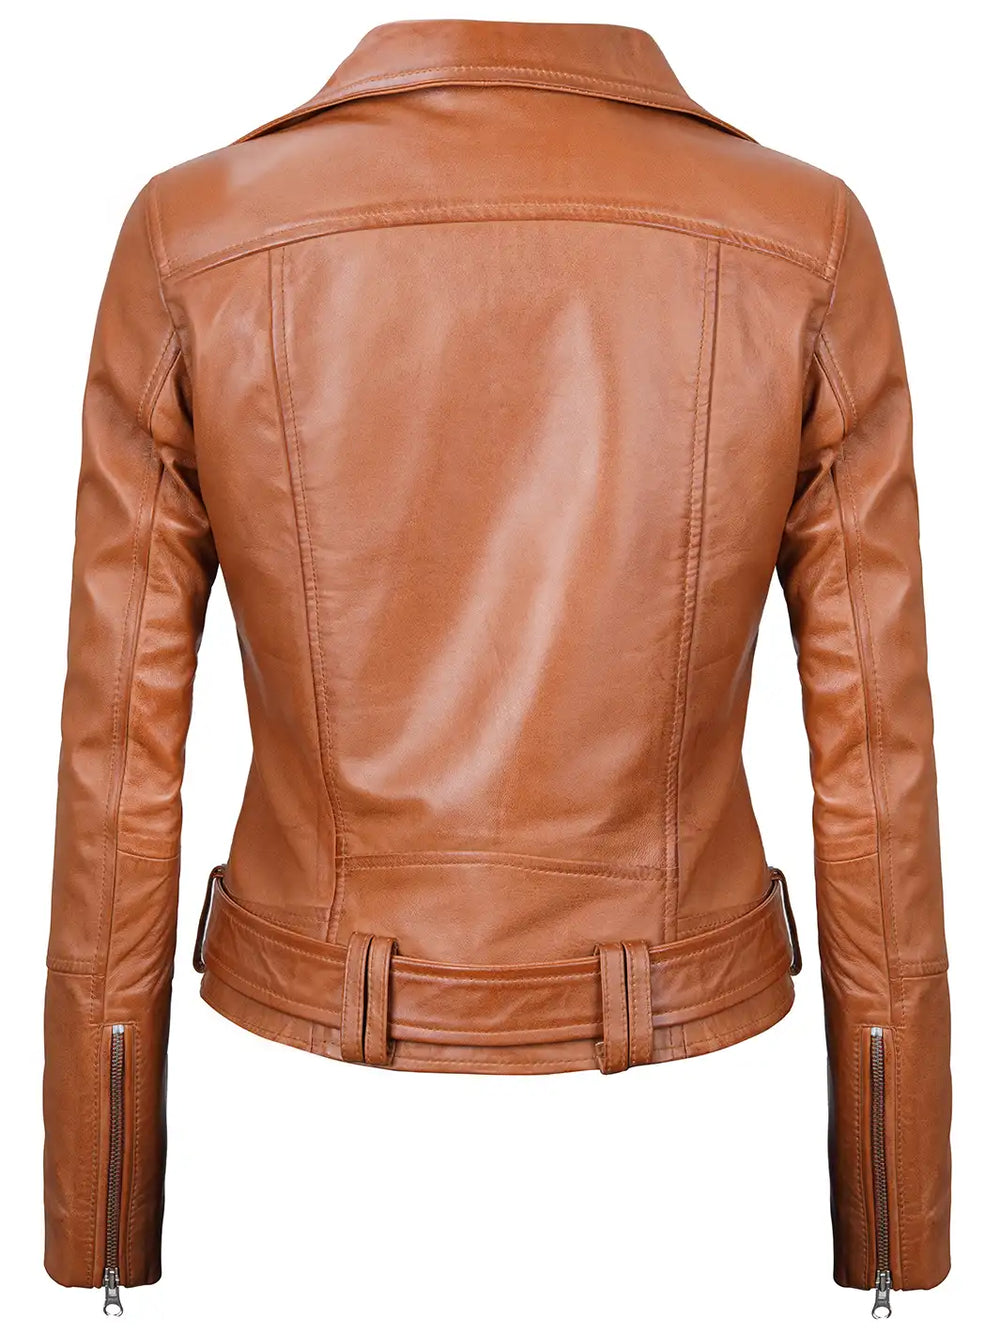 Women leather jacket